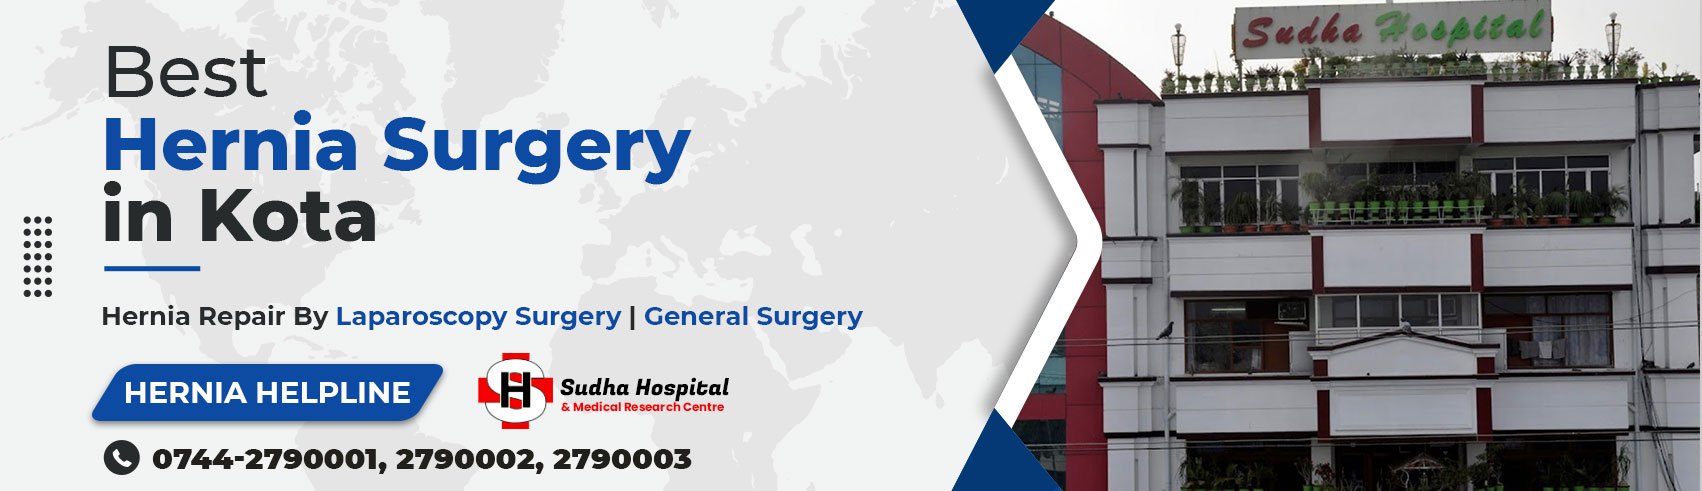 Hernia Treatment in Kota | Hernia Surgery in Kota | Google adsense banner | Sudha Hospital & Medical Research Centre